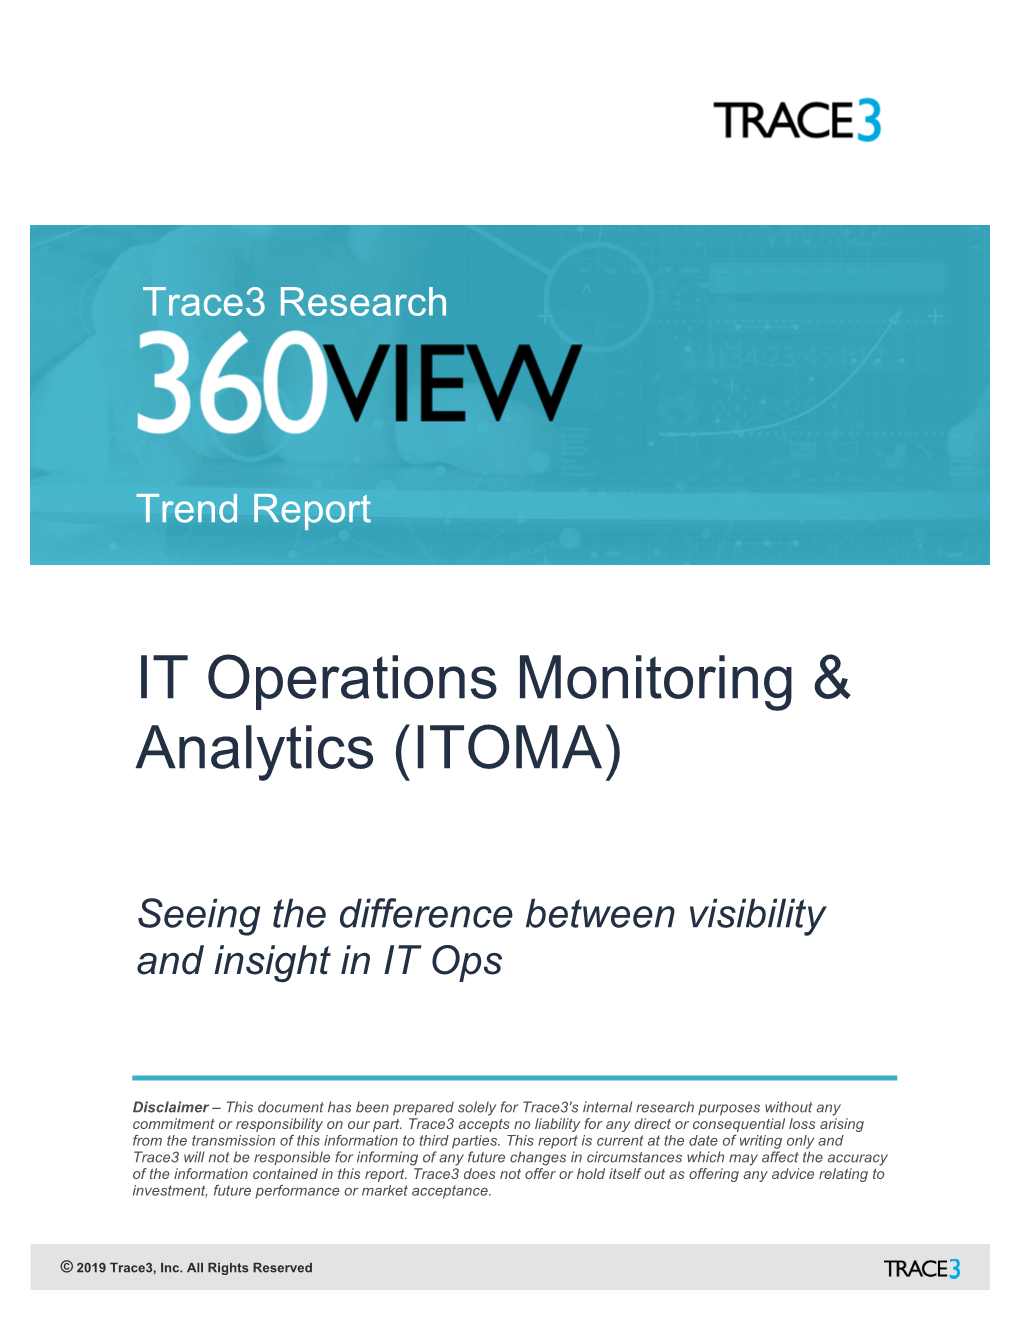 IT Operations Monitoring & Analytics (ITOMA)